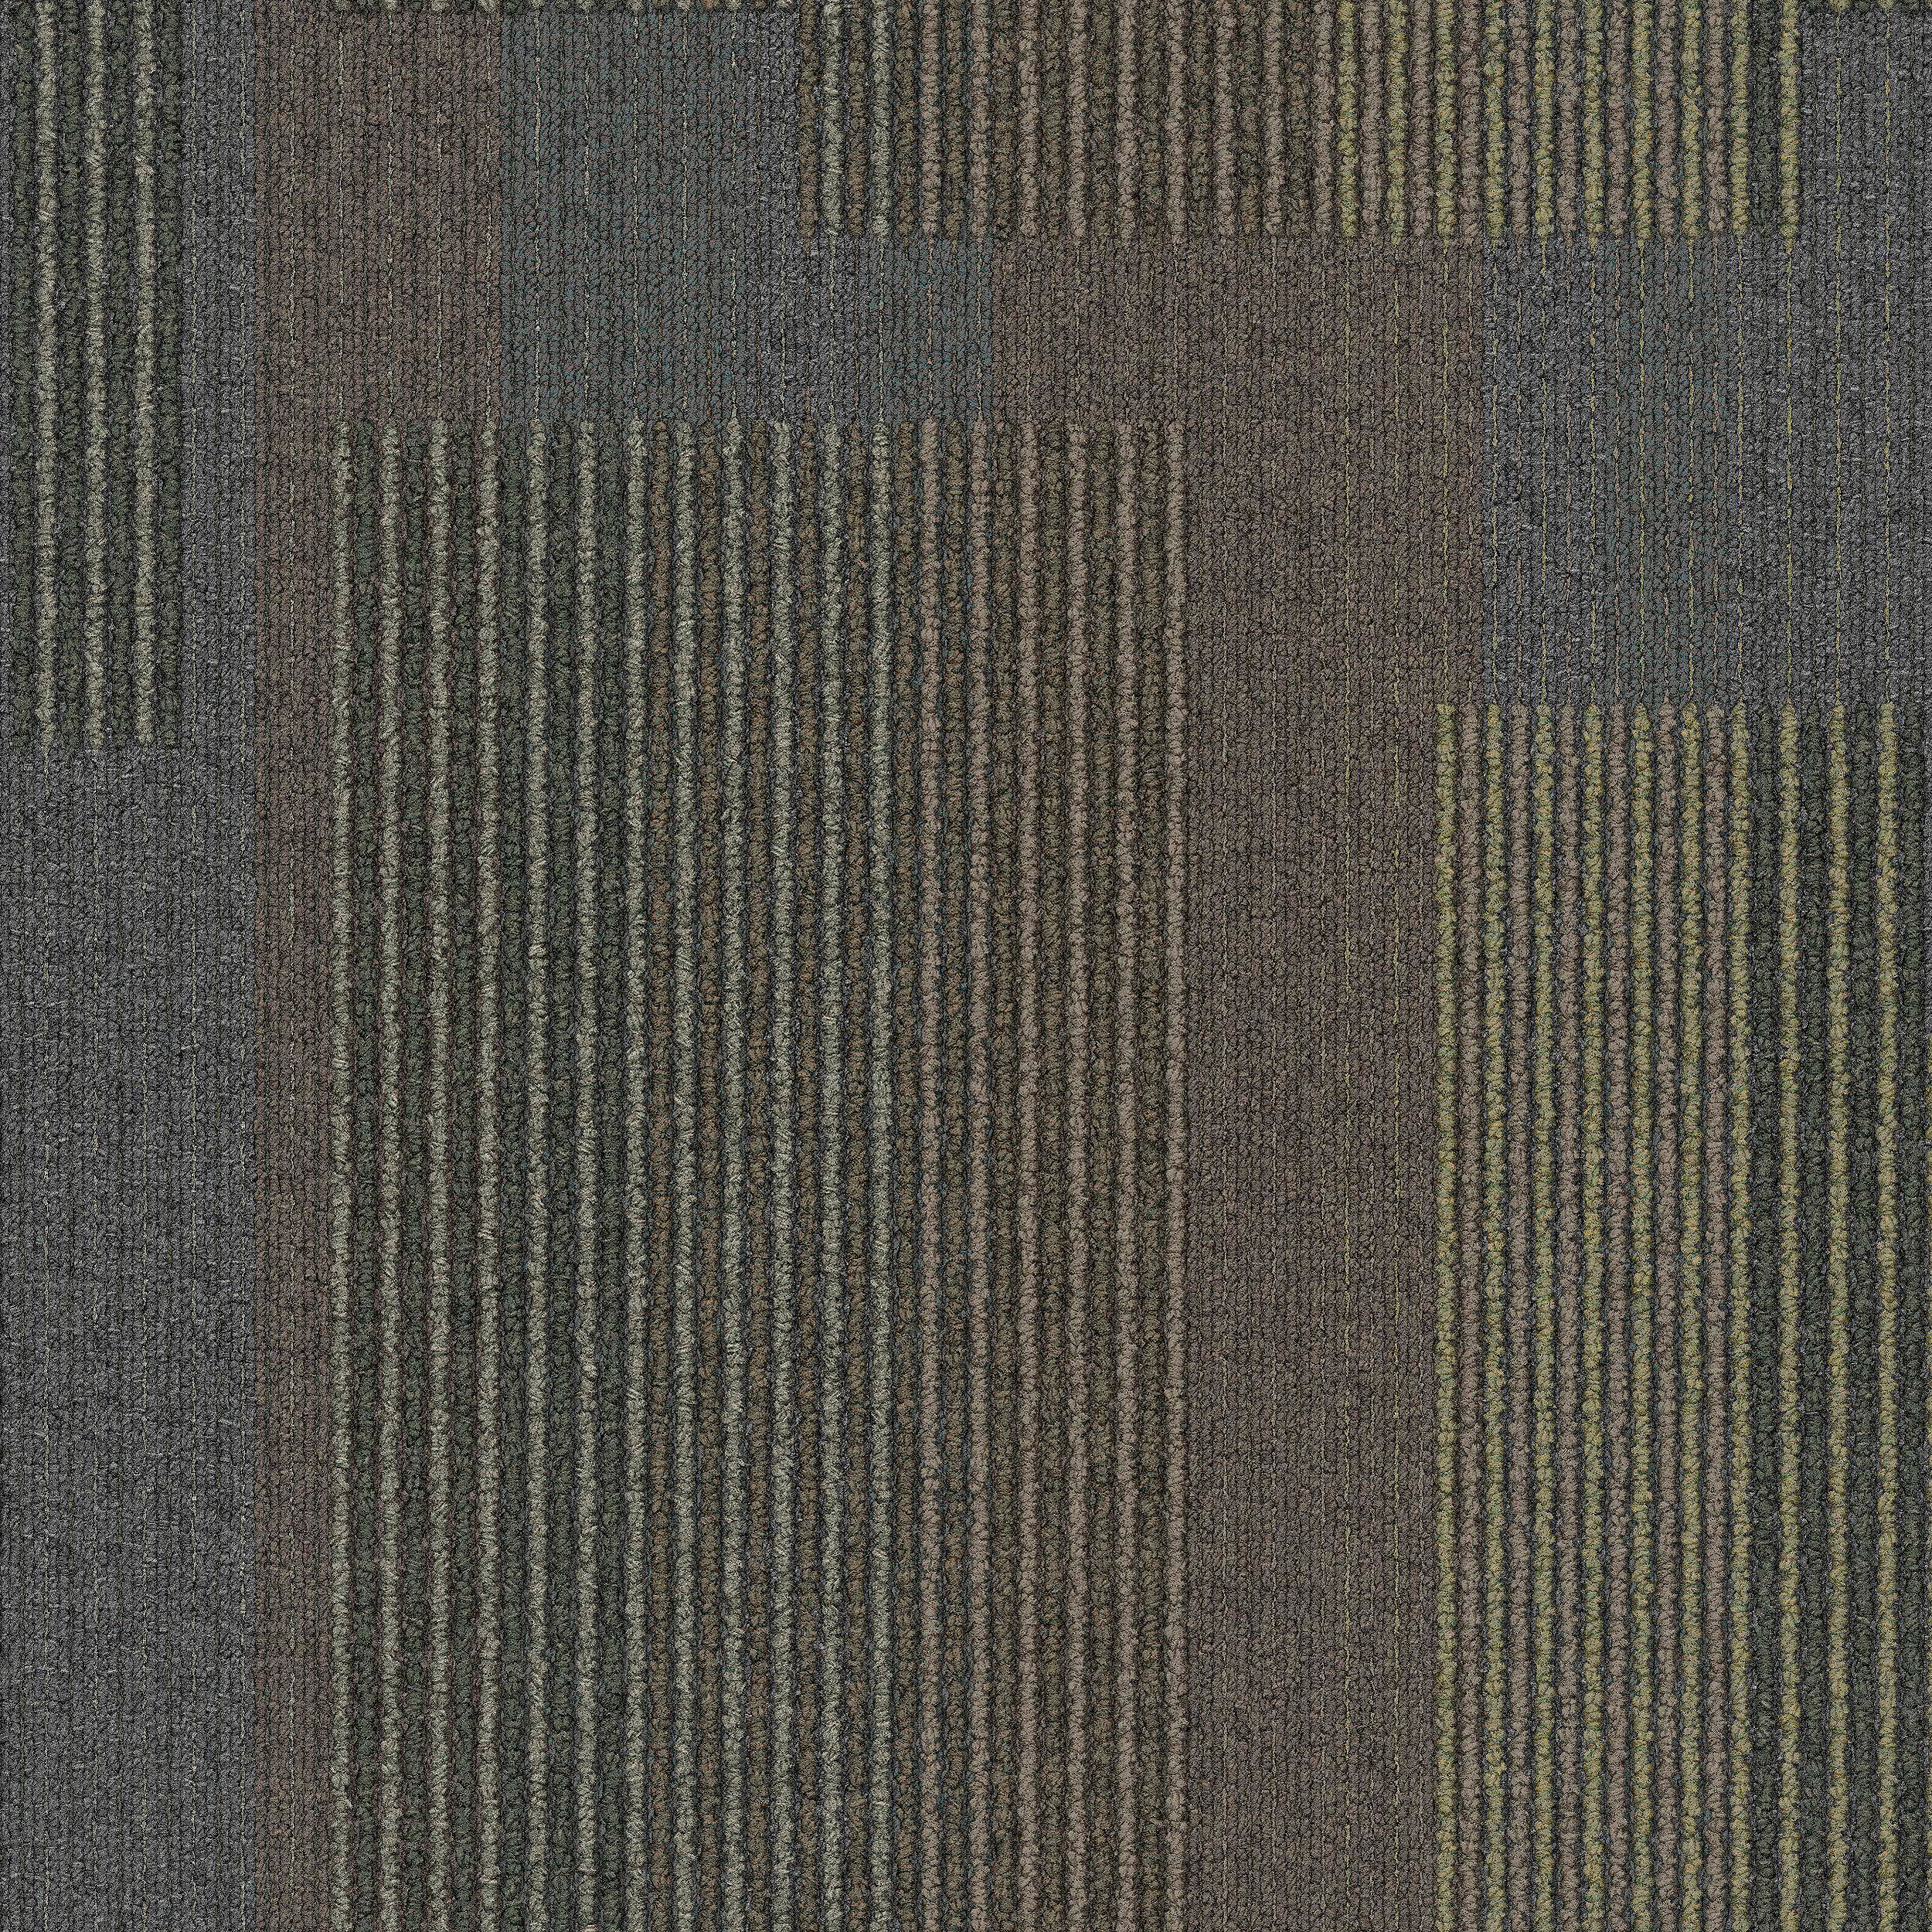 Happening Carpet Tile In Reflections image number 7